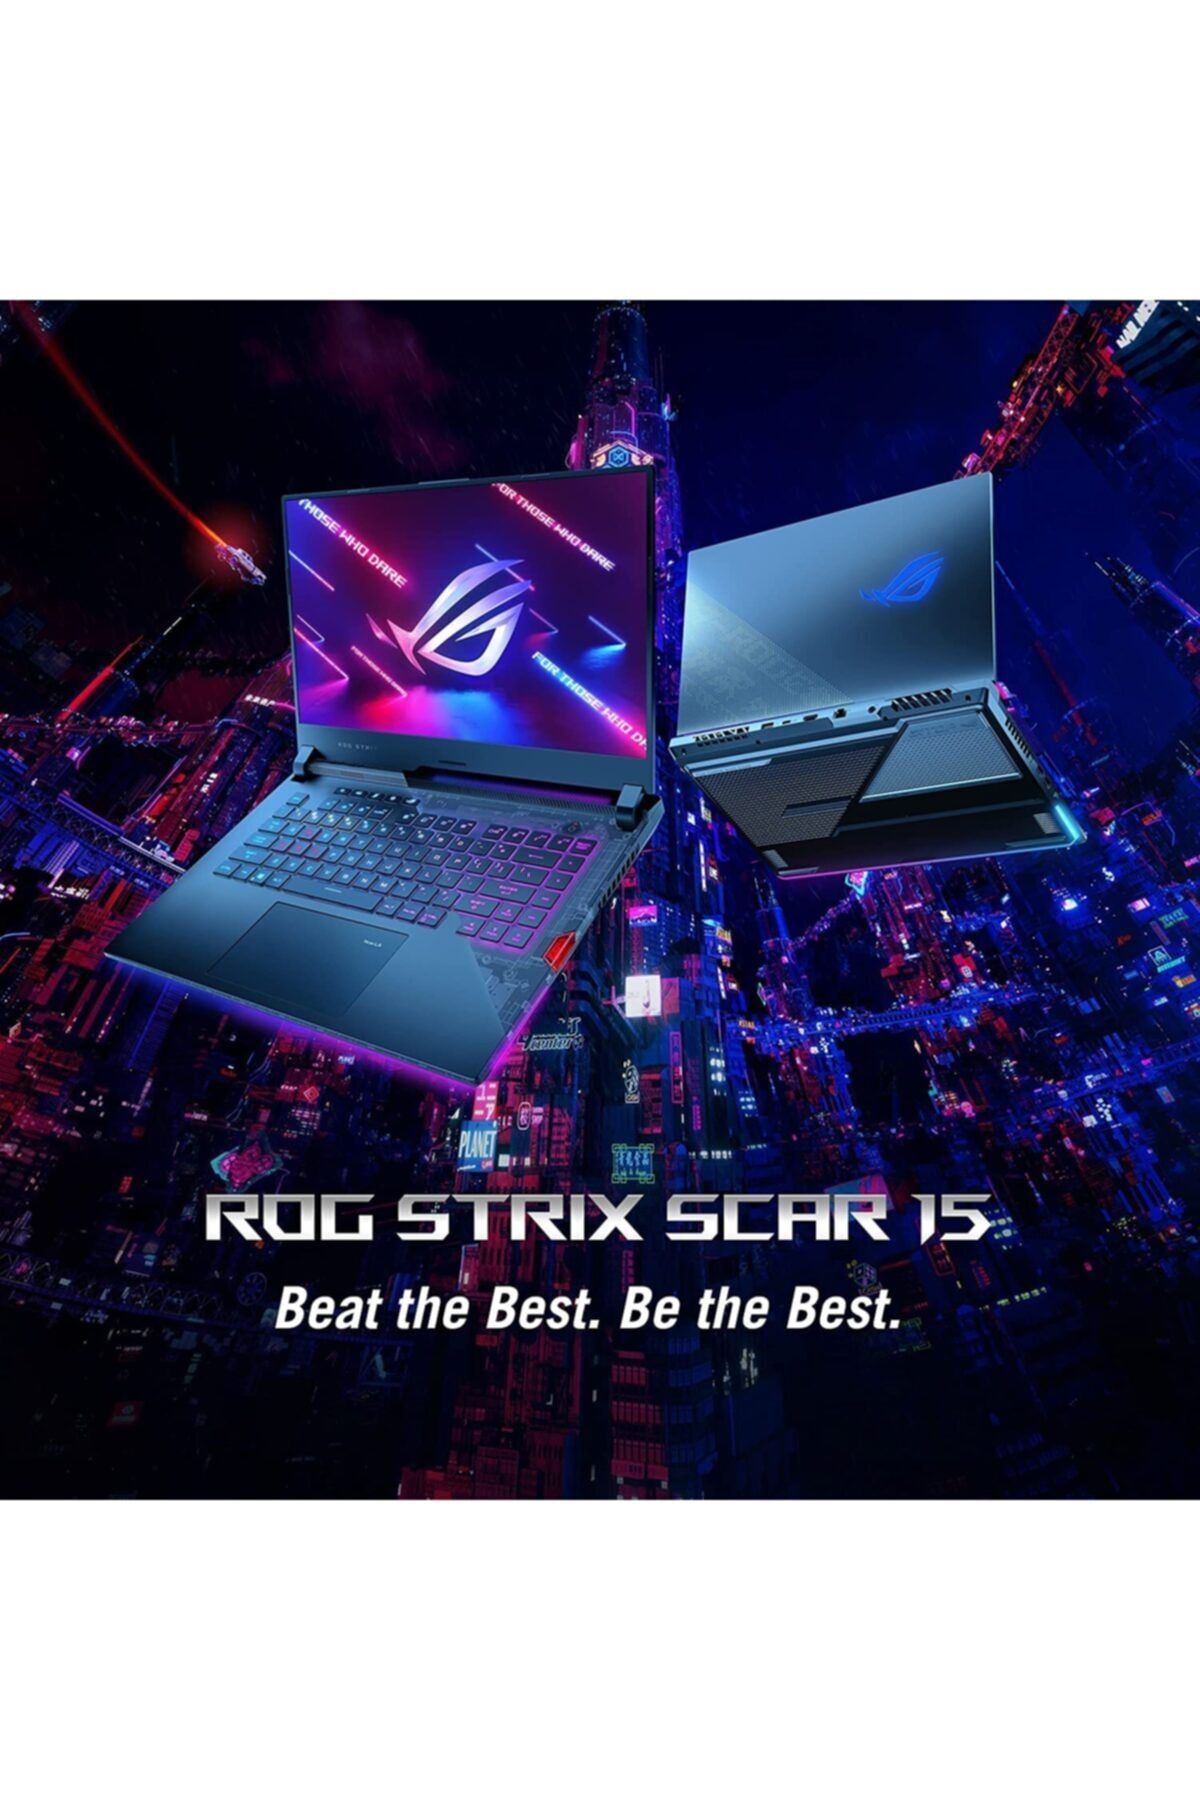 ASUS ROG Strix Scar 15 (2021) Gaming Laptop, 15.6" 300Hz IPS Type FHD  Display, NVIDIA GeForce RTX 3080 (130W), 8-core AMD Ryzen 5900HX，Windows  10 H